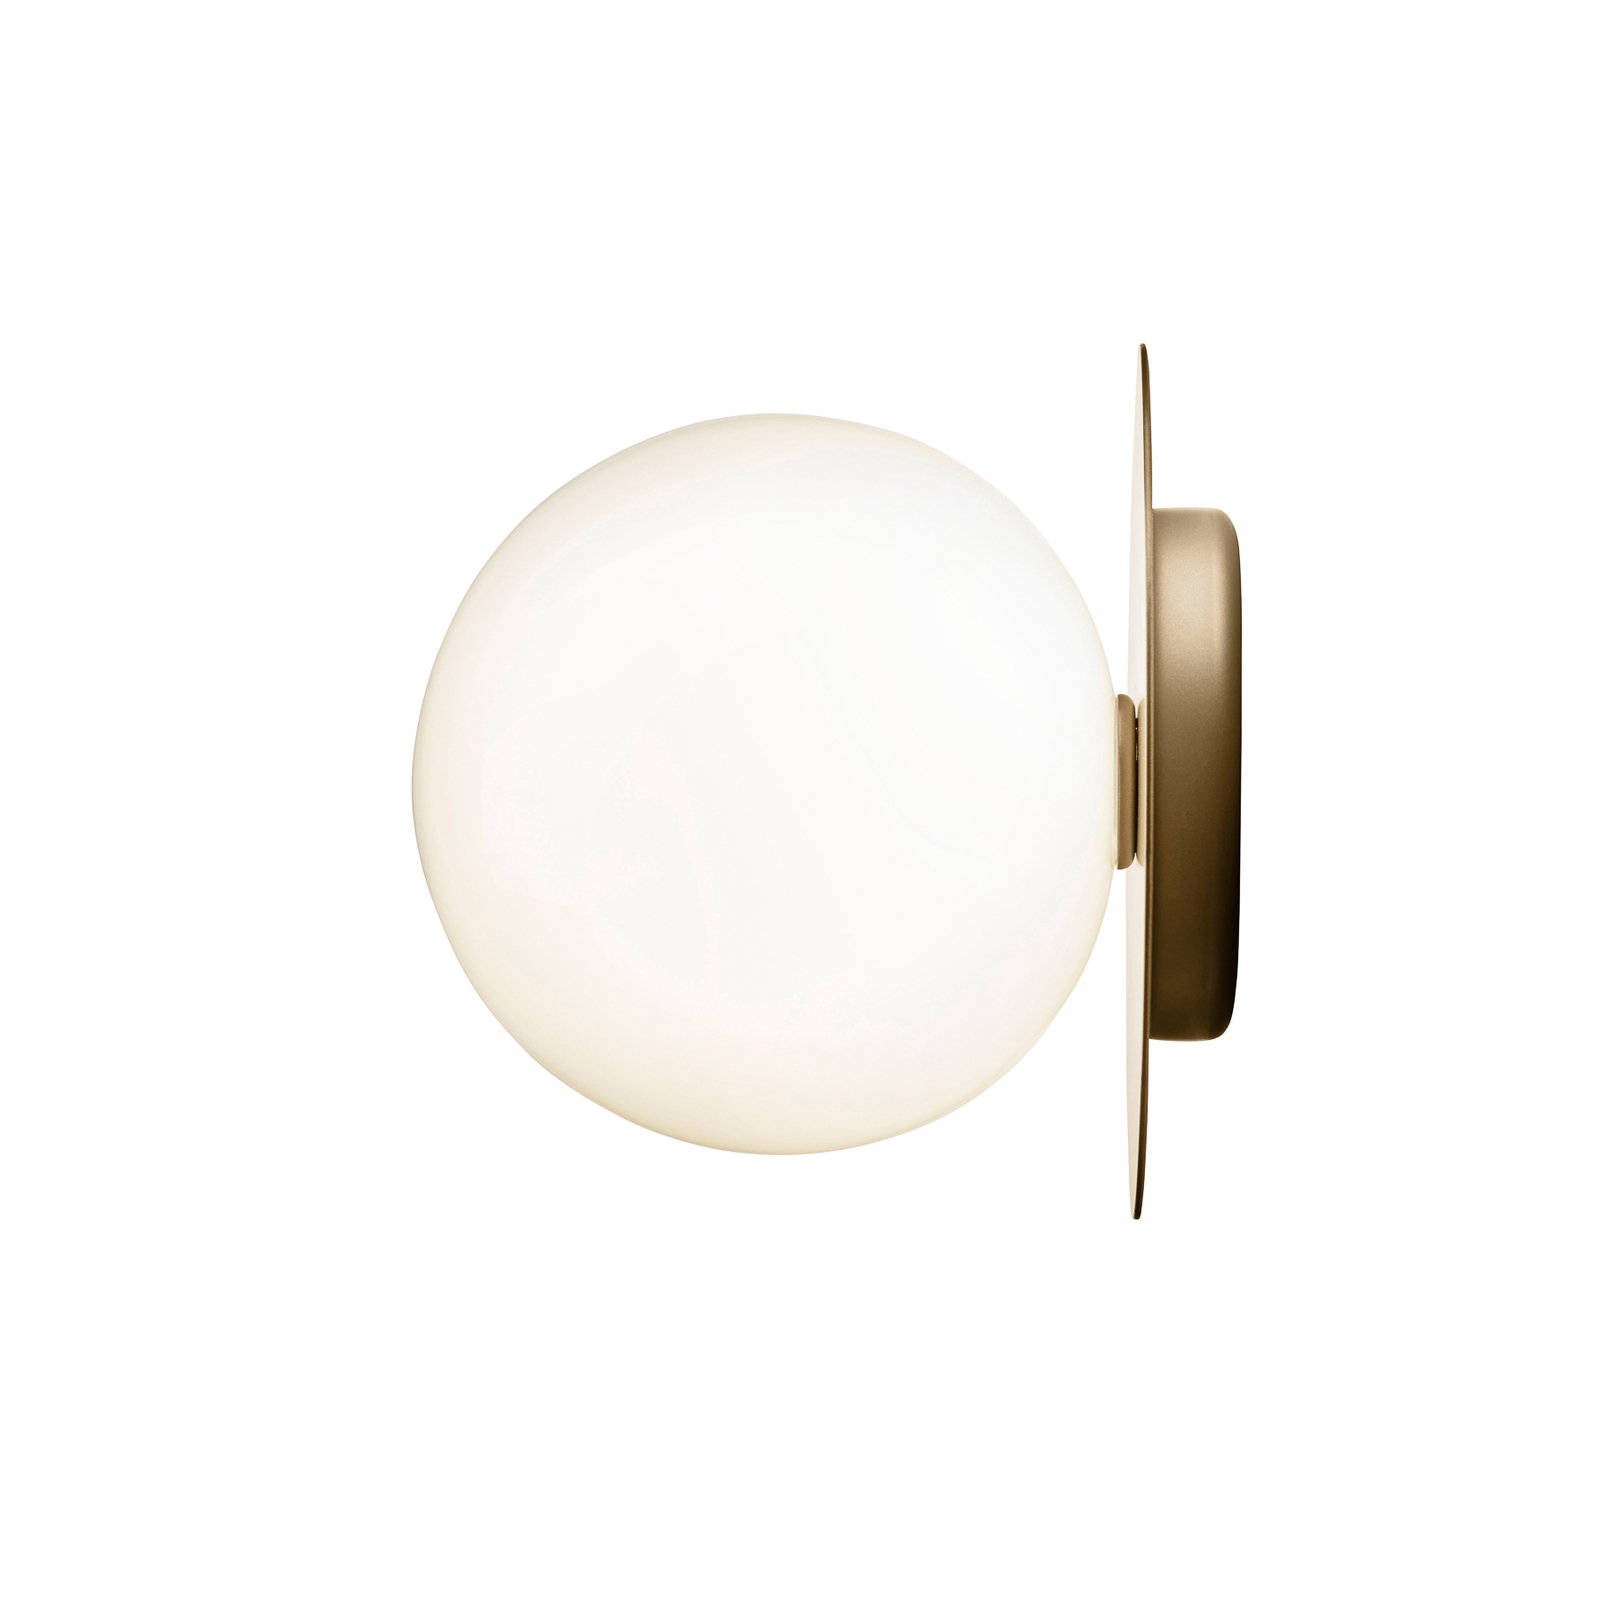 Nuura Liila 1 Large wall light 1-bulb gold/white